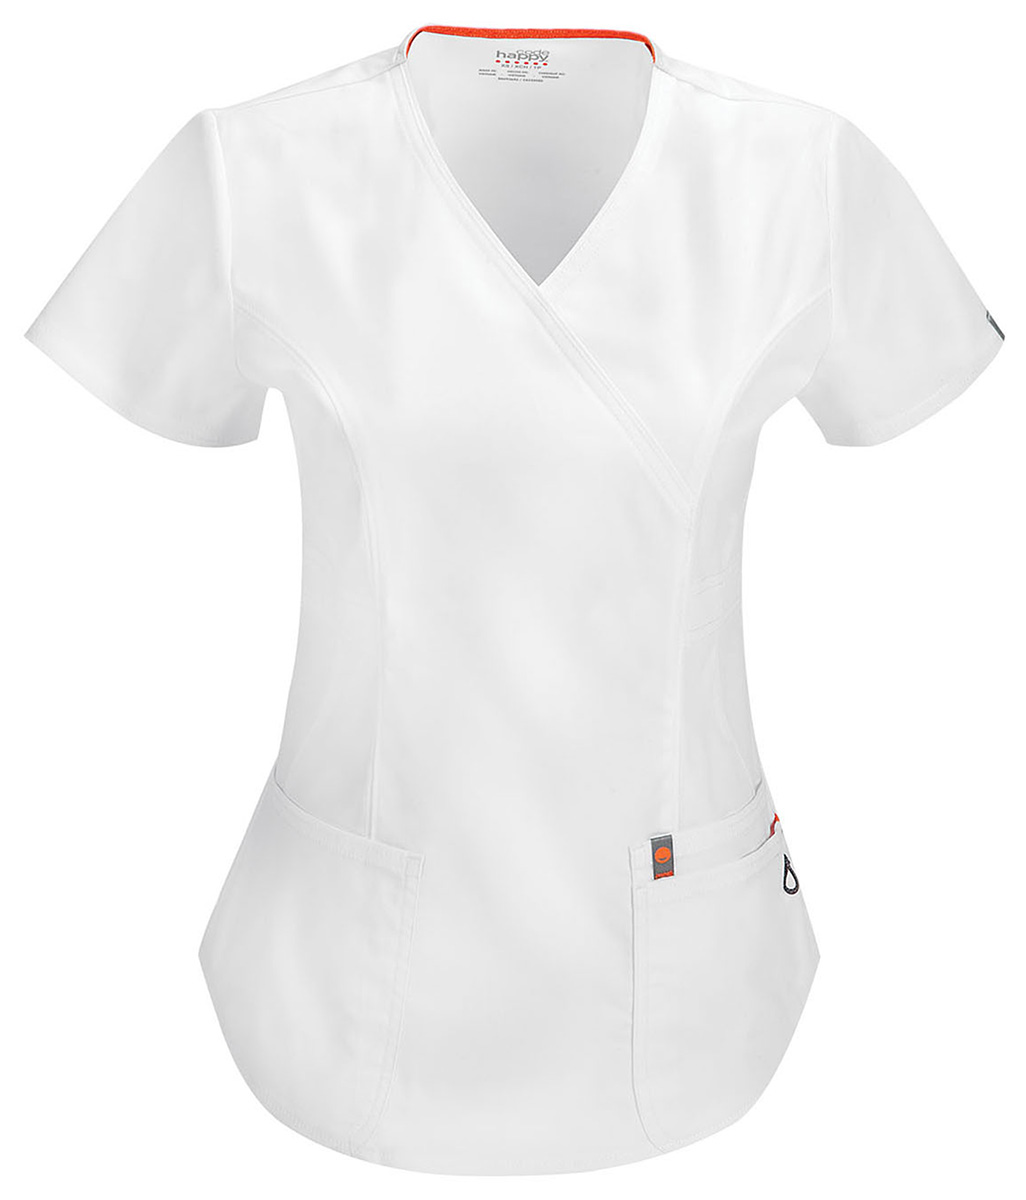 nurse uniform mock up